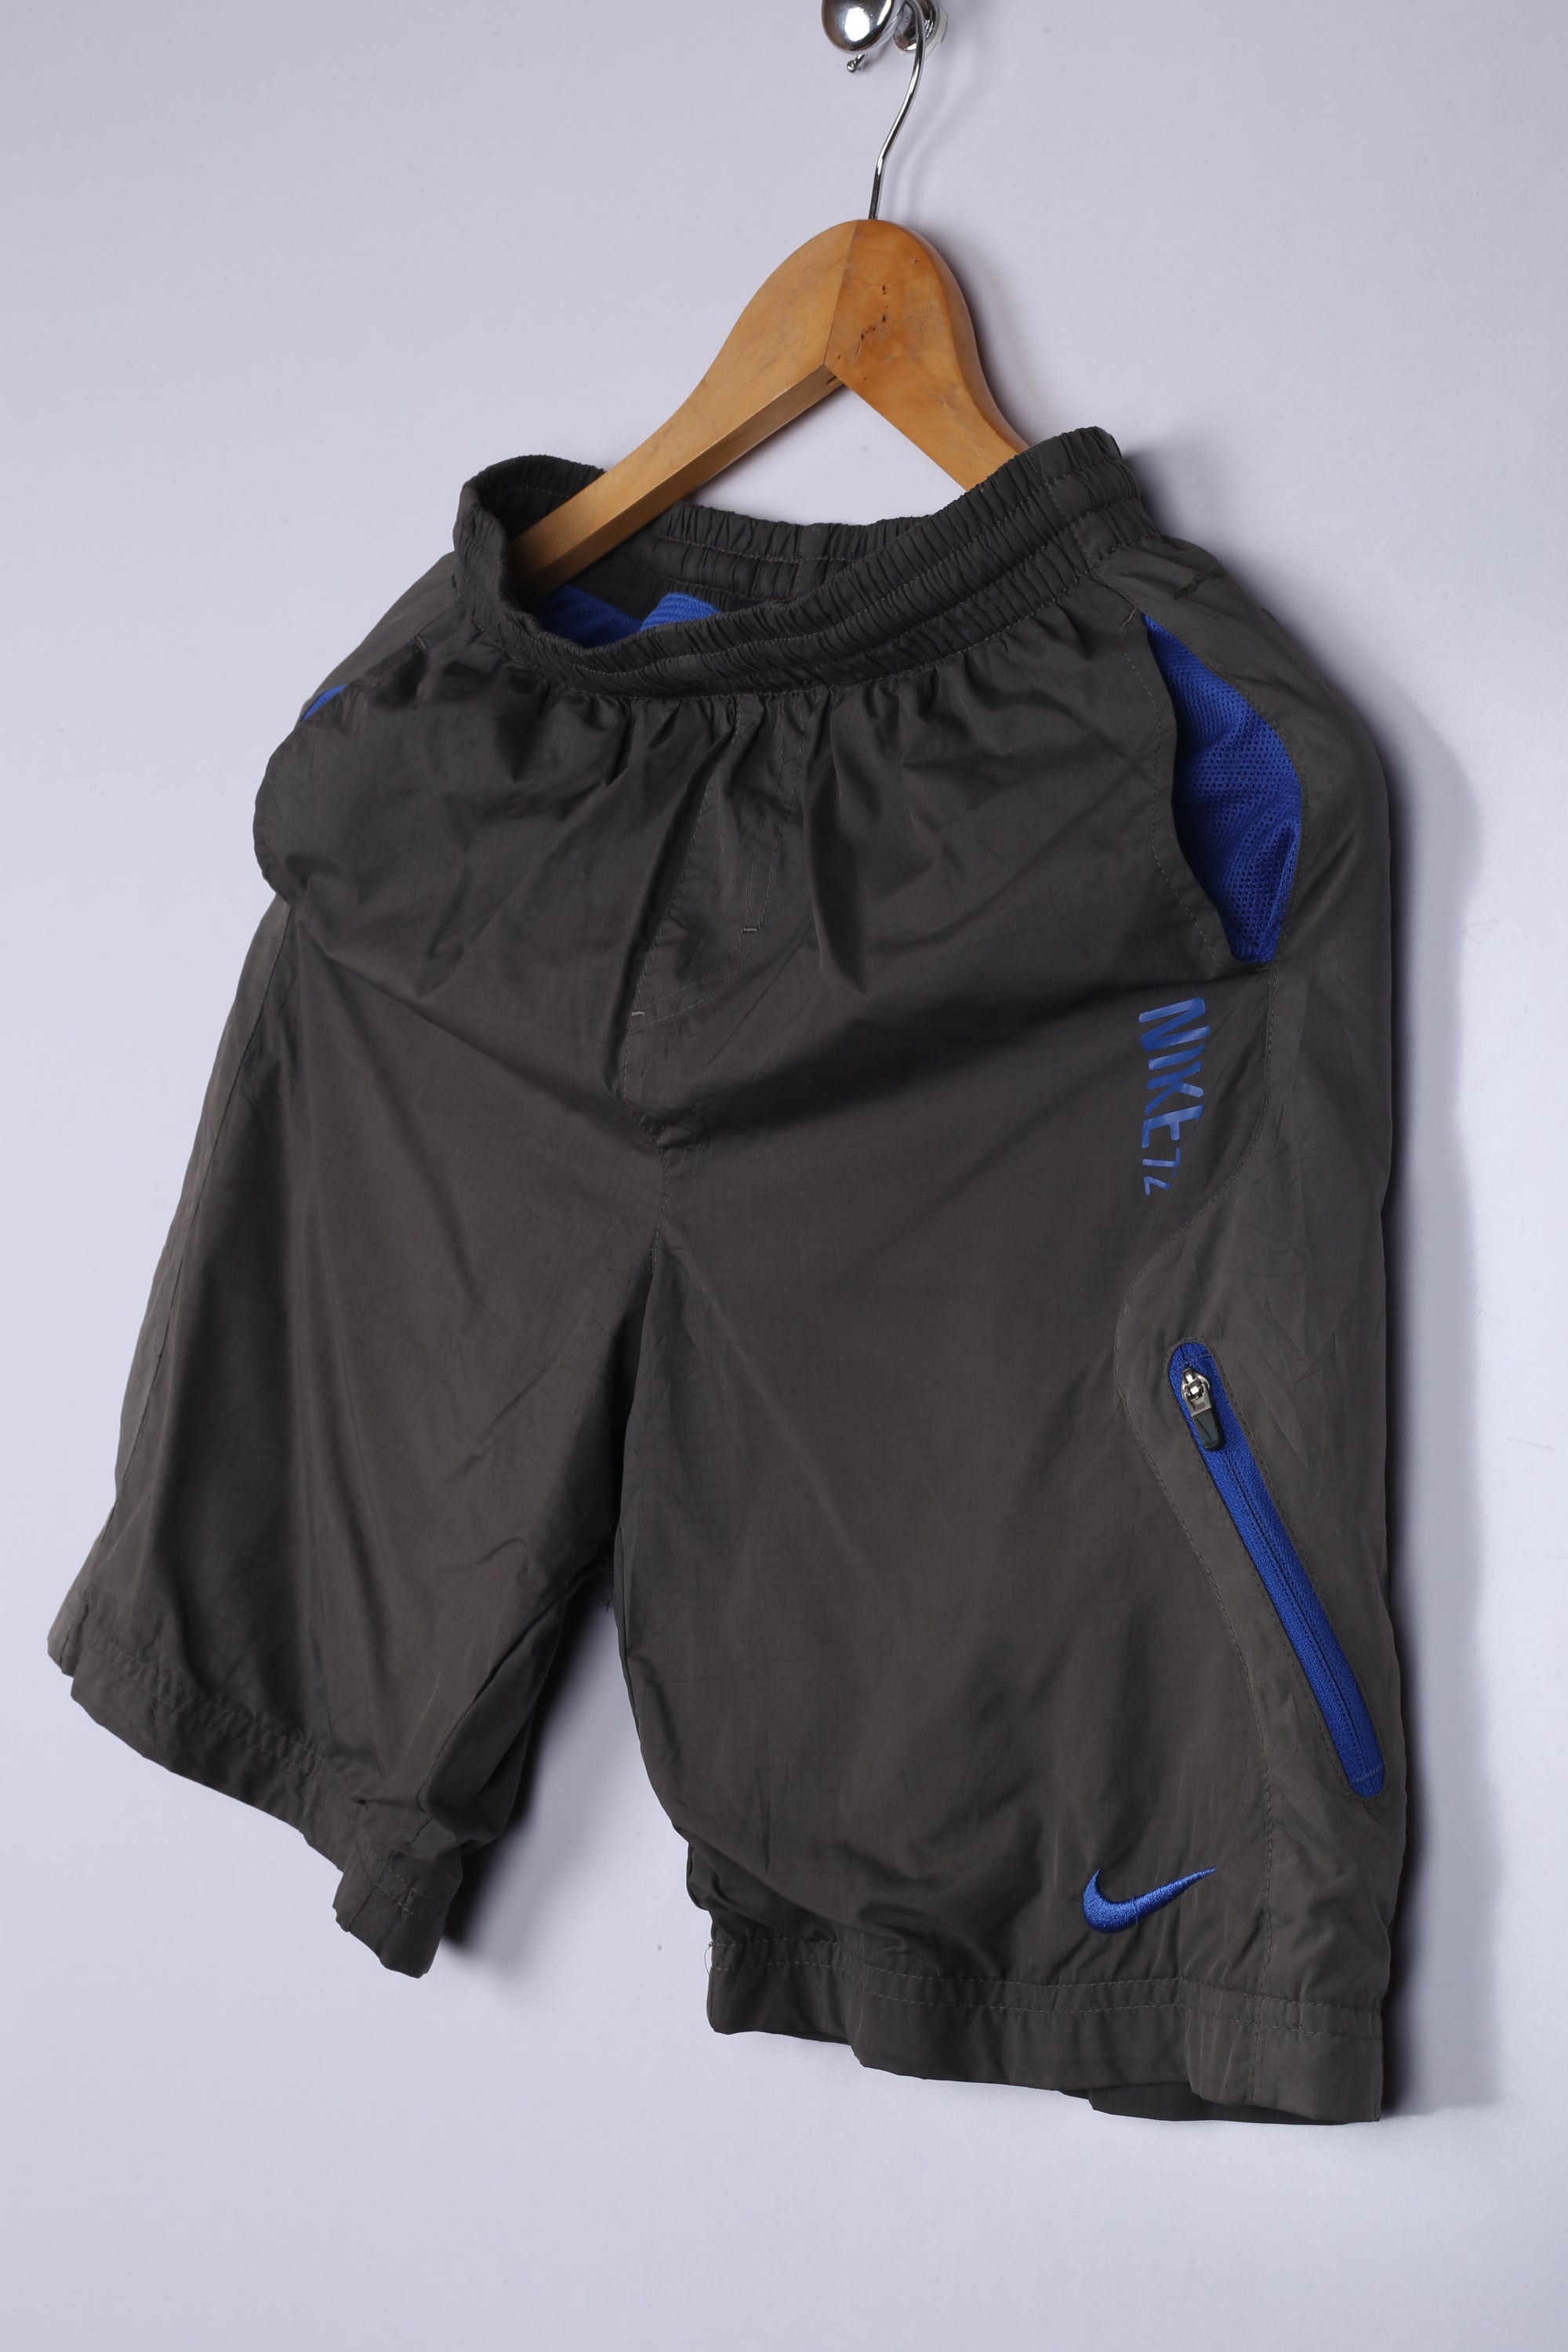 Vintage Nike Shorts Grey X Small